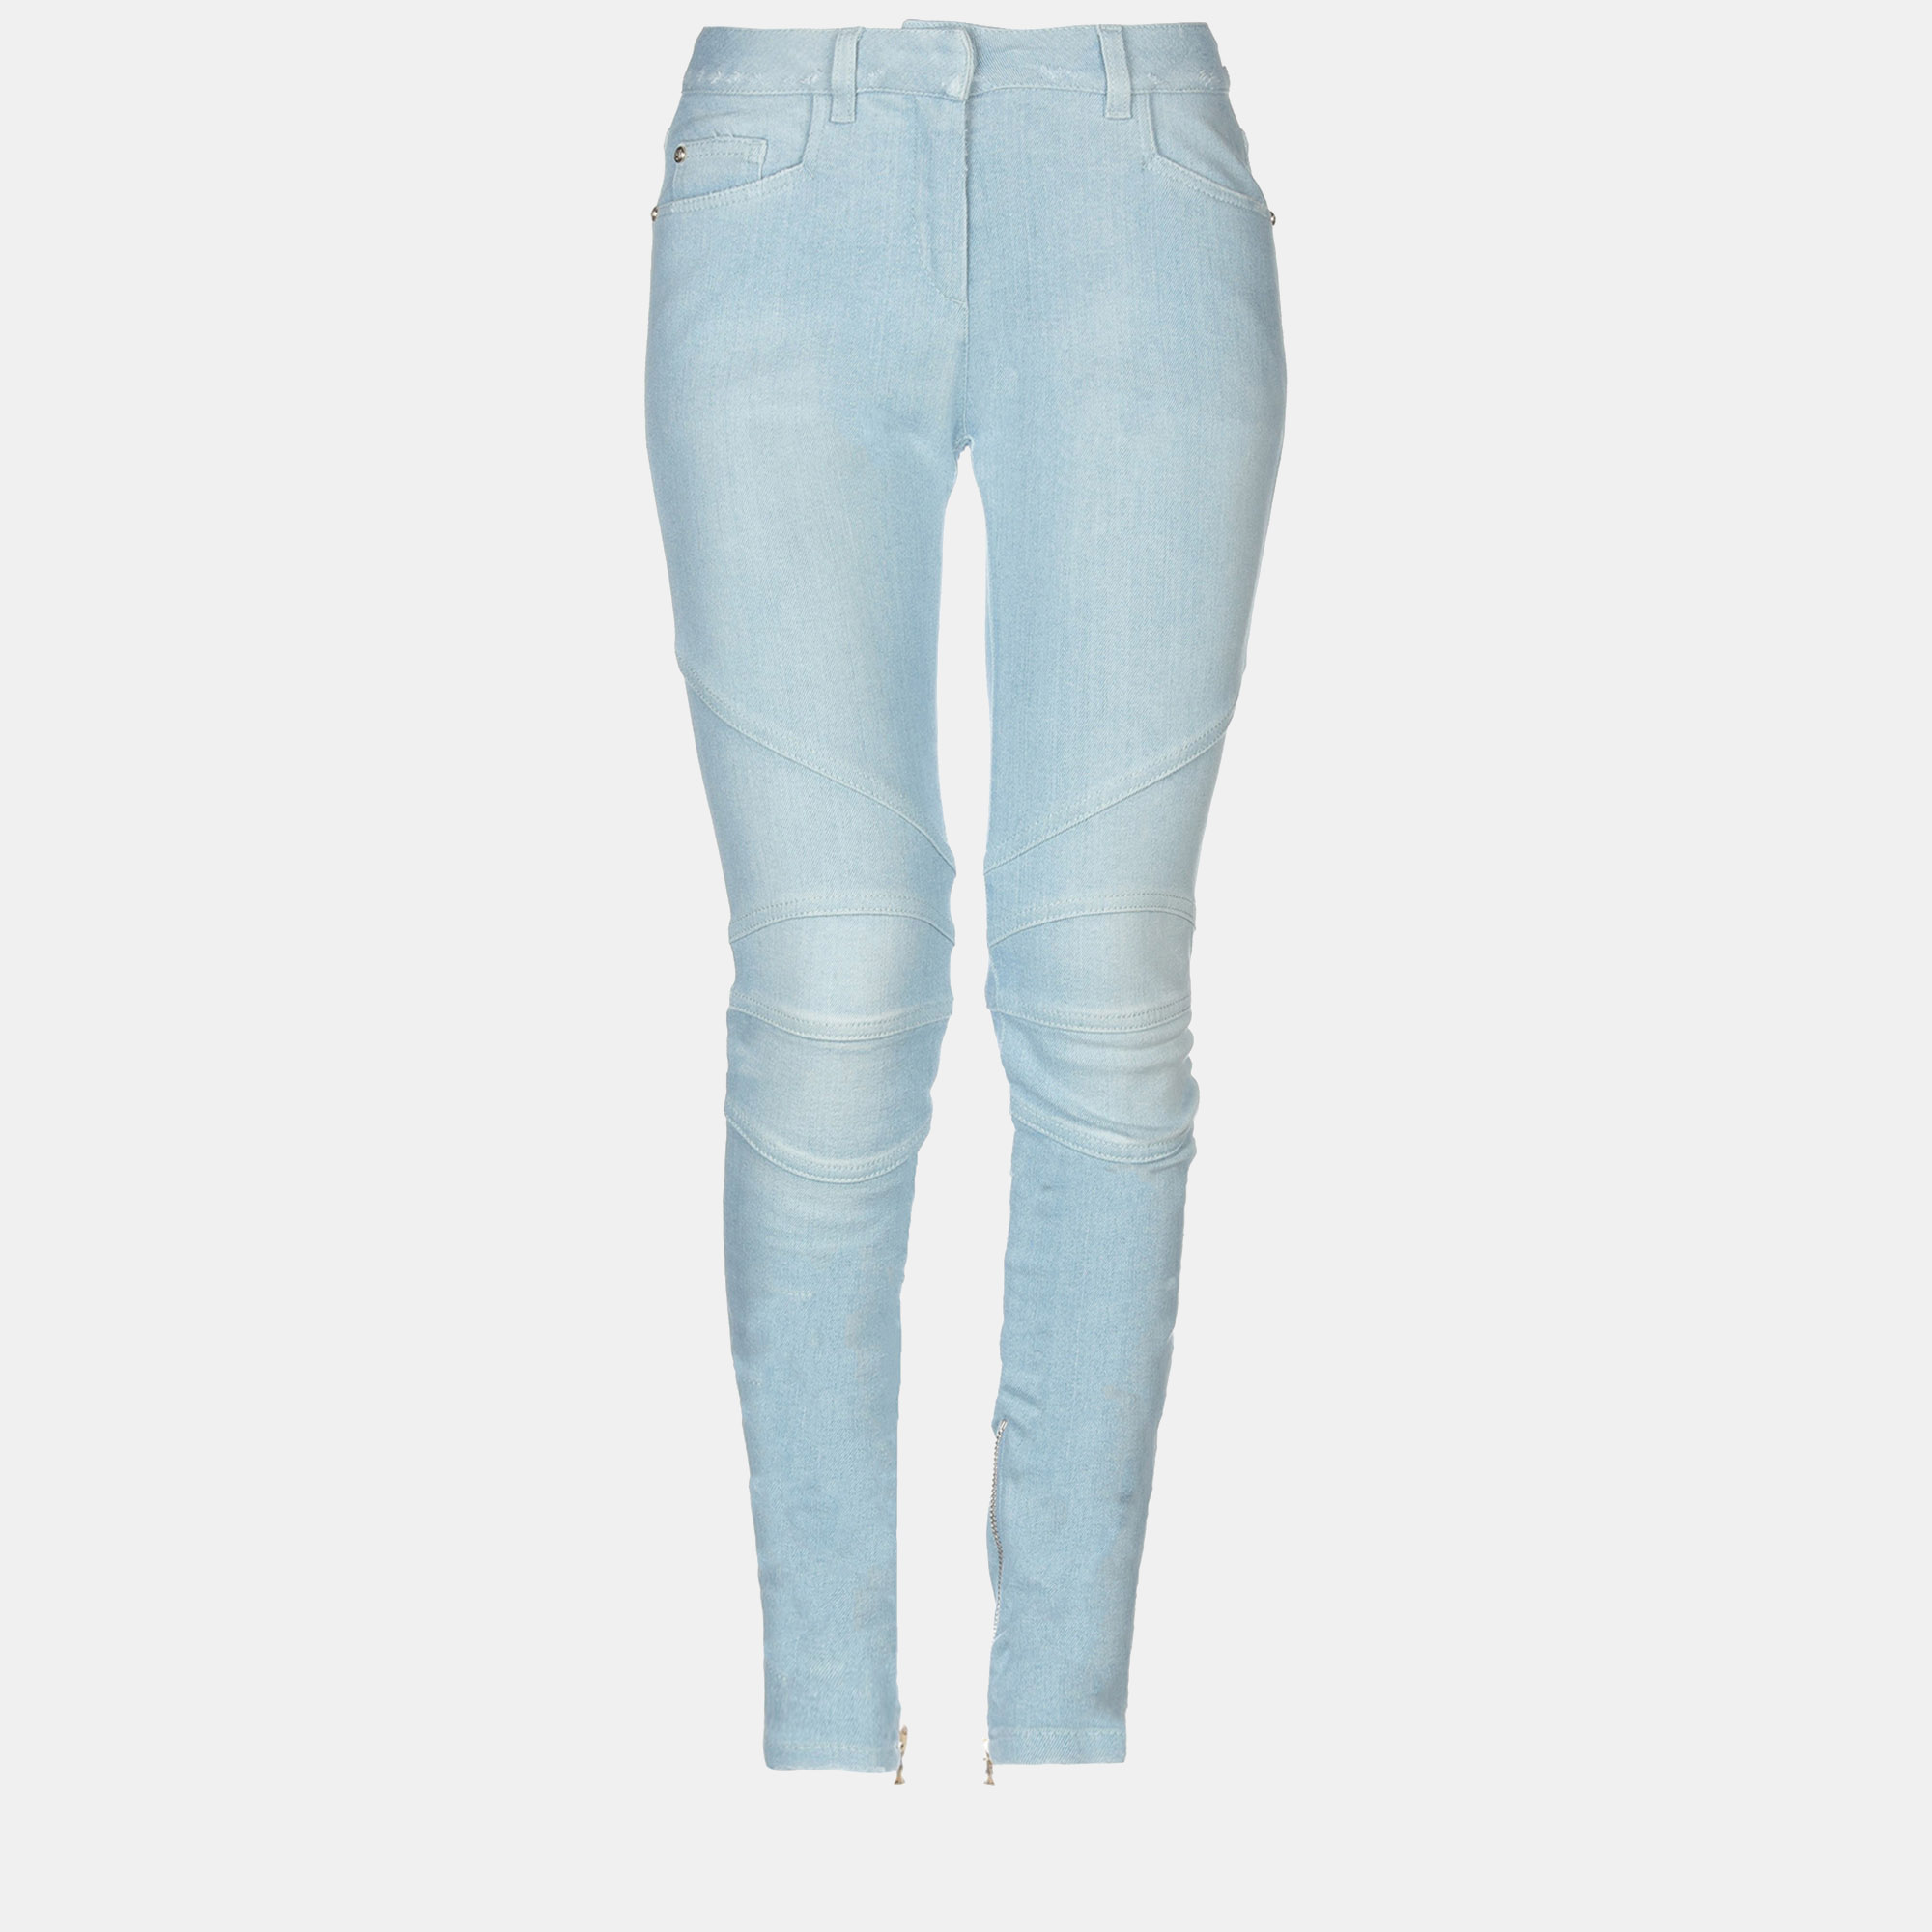 Balmain light blue denim jeans size 36